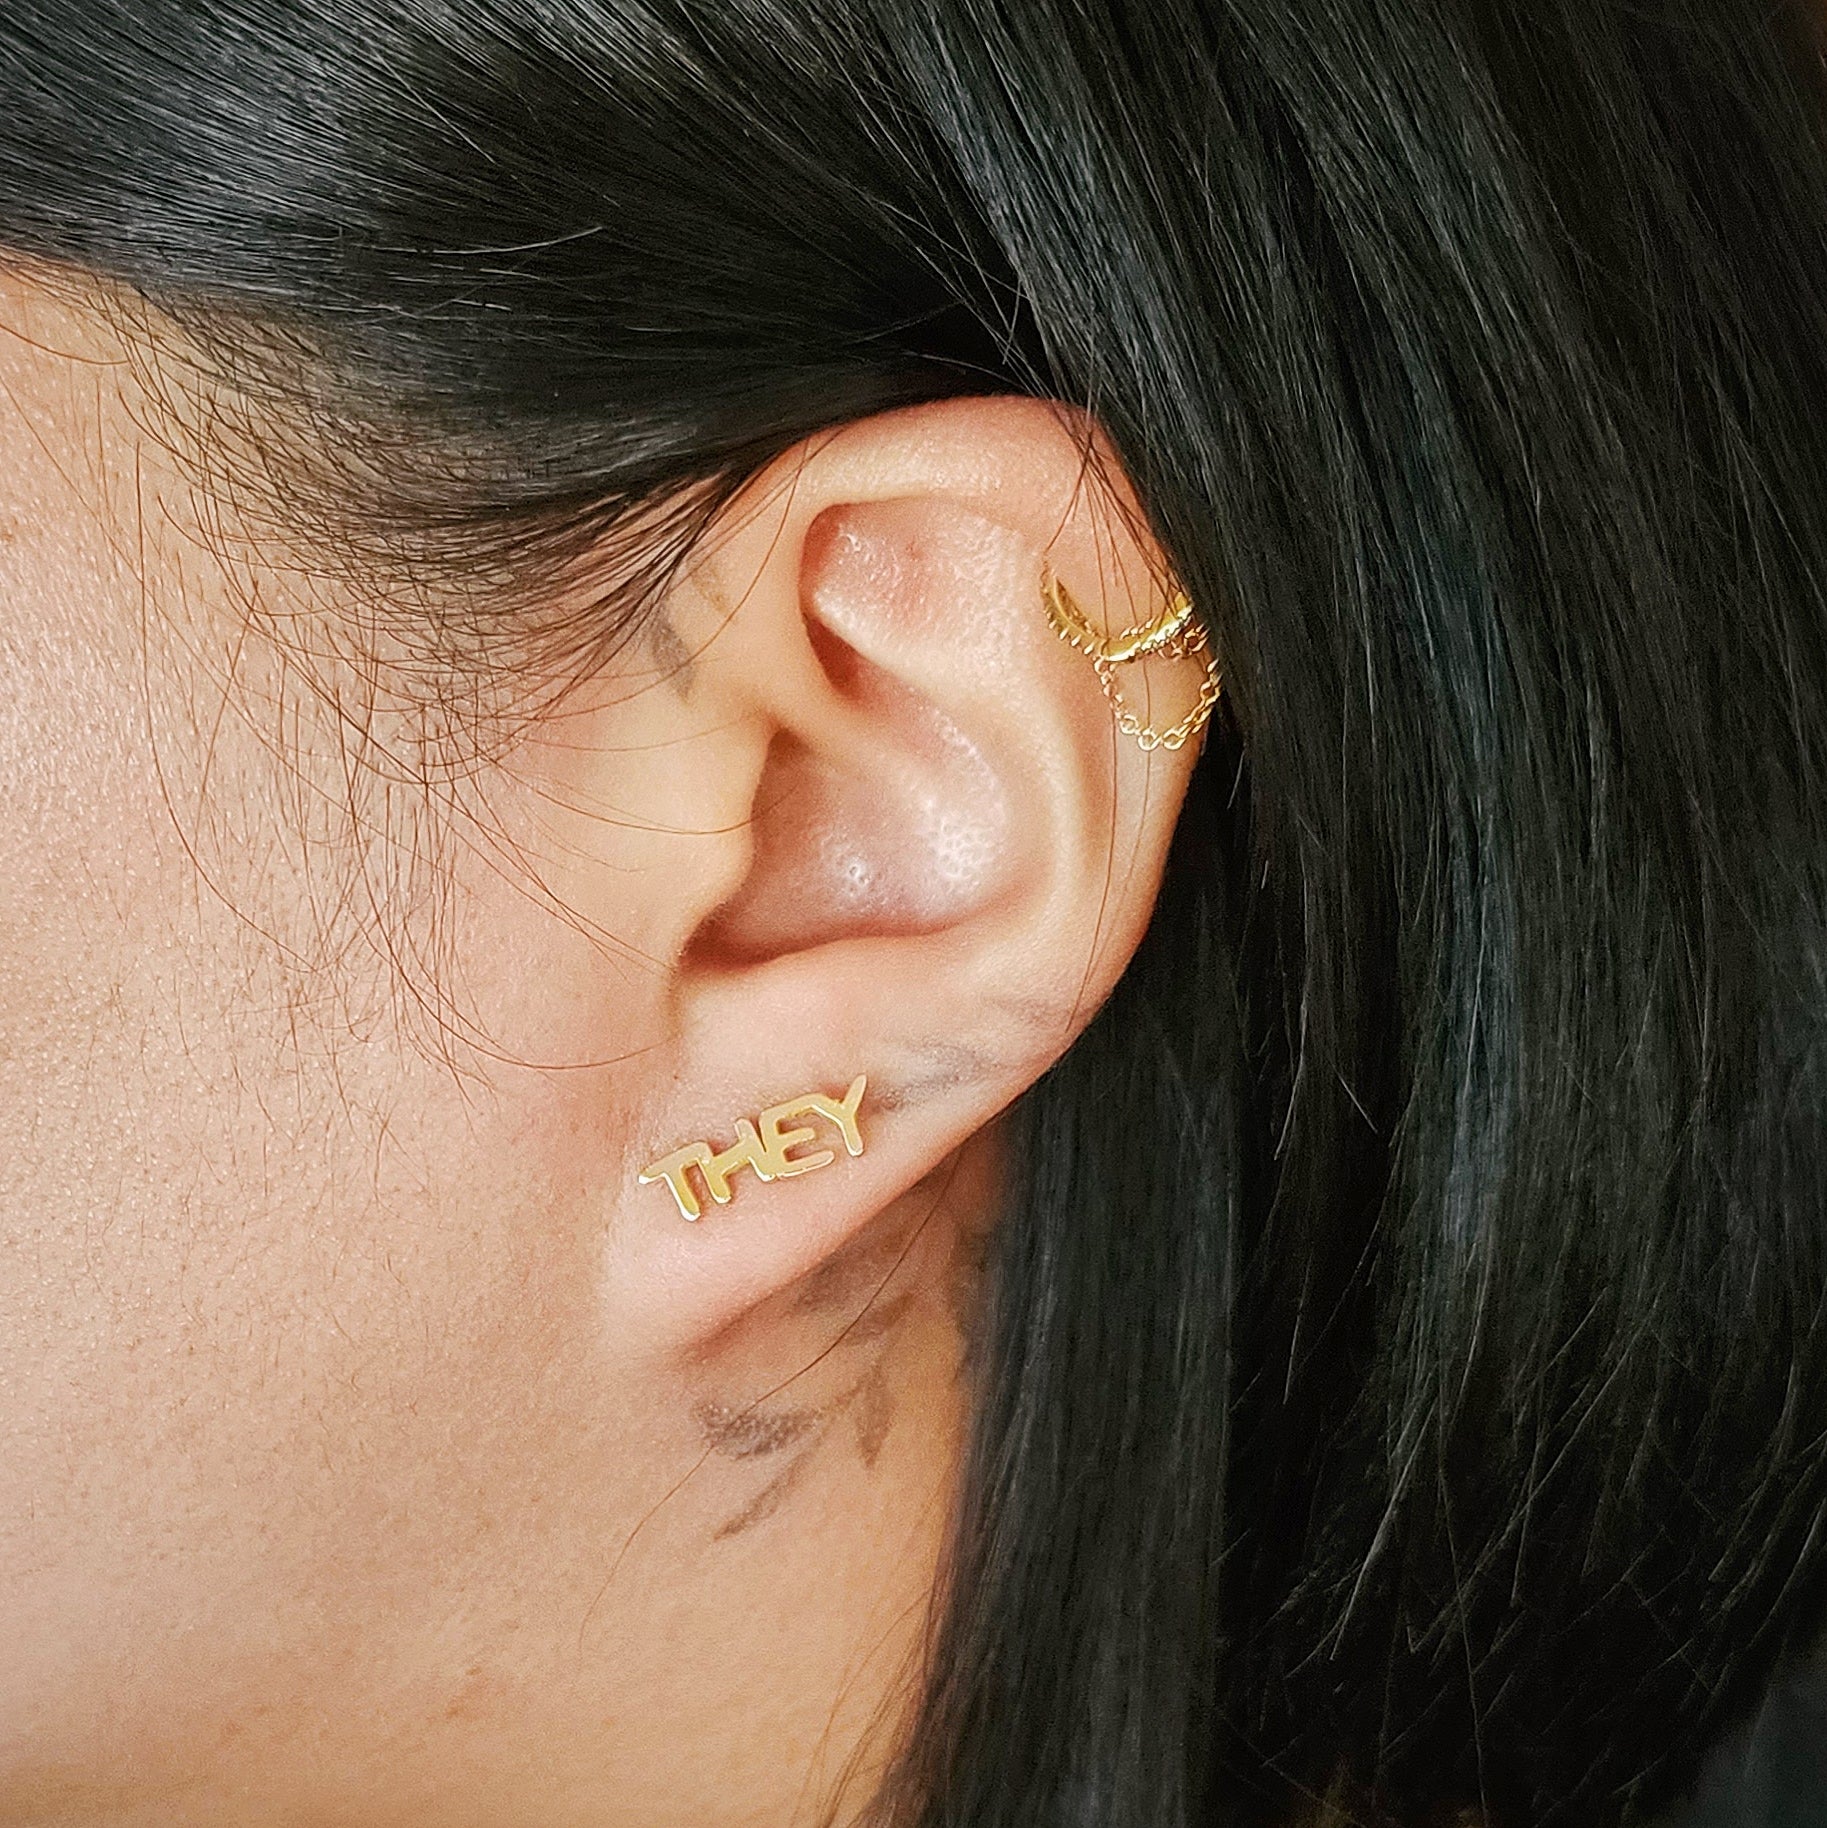 Gold Pronoun Stud Earrings - they/them